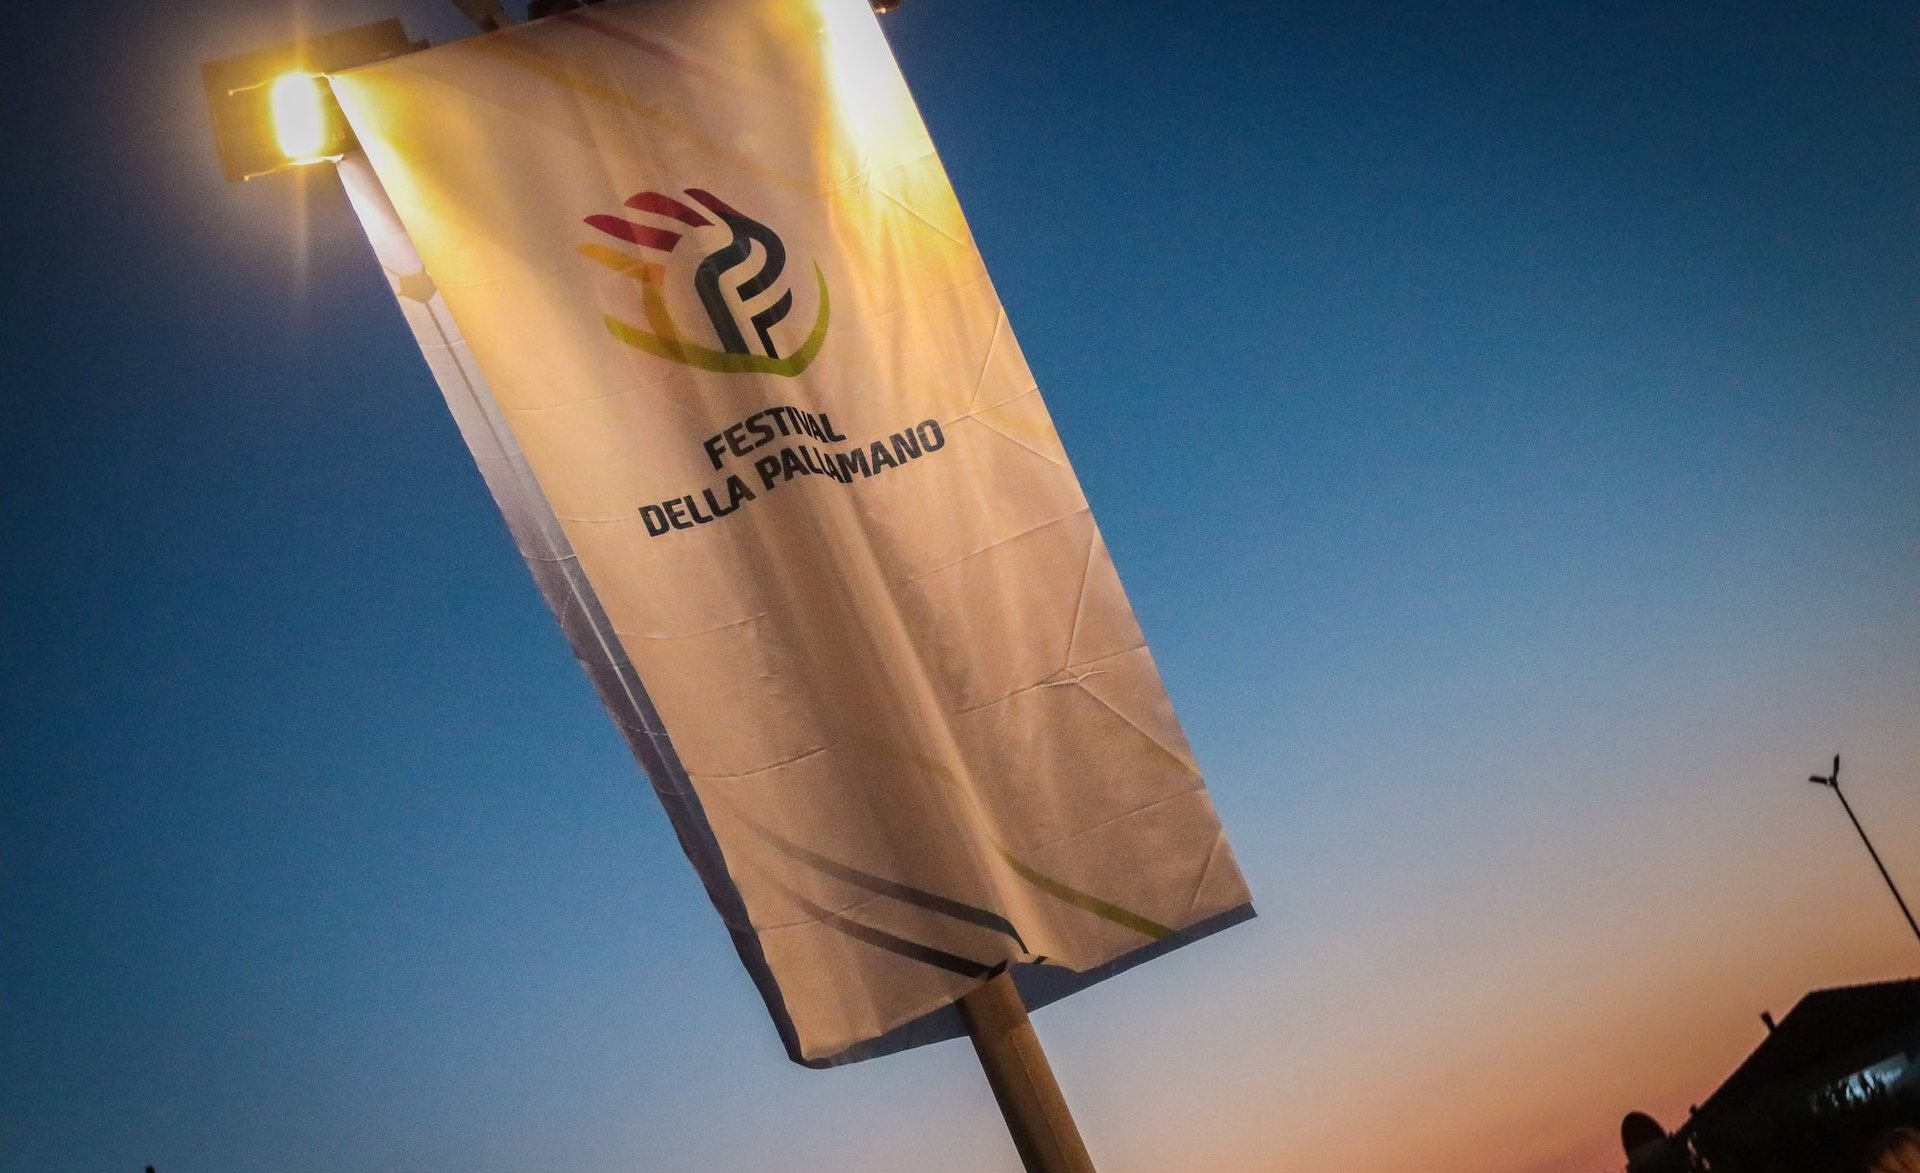 images/2023/festival-pallamano-bandiera-2022.jpeg#joomlaImage://local-images/2023/festival-pallamano-bandiera-2022.jpeg?width=1920&height=1173